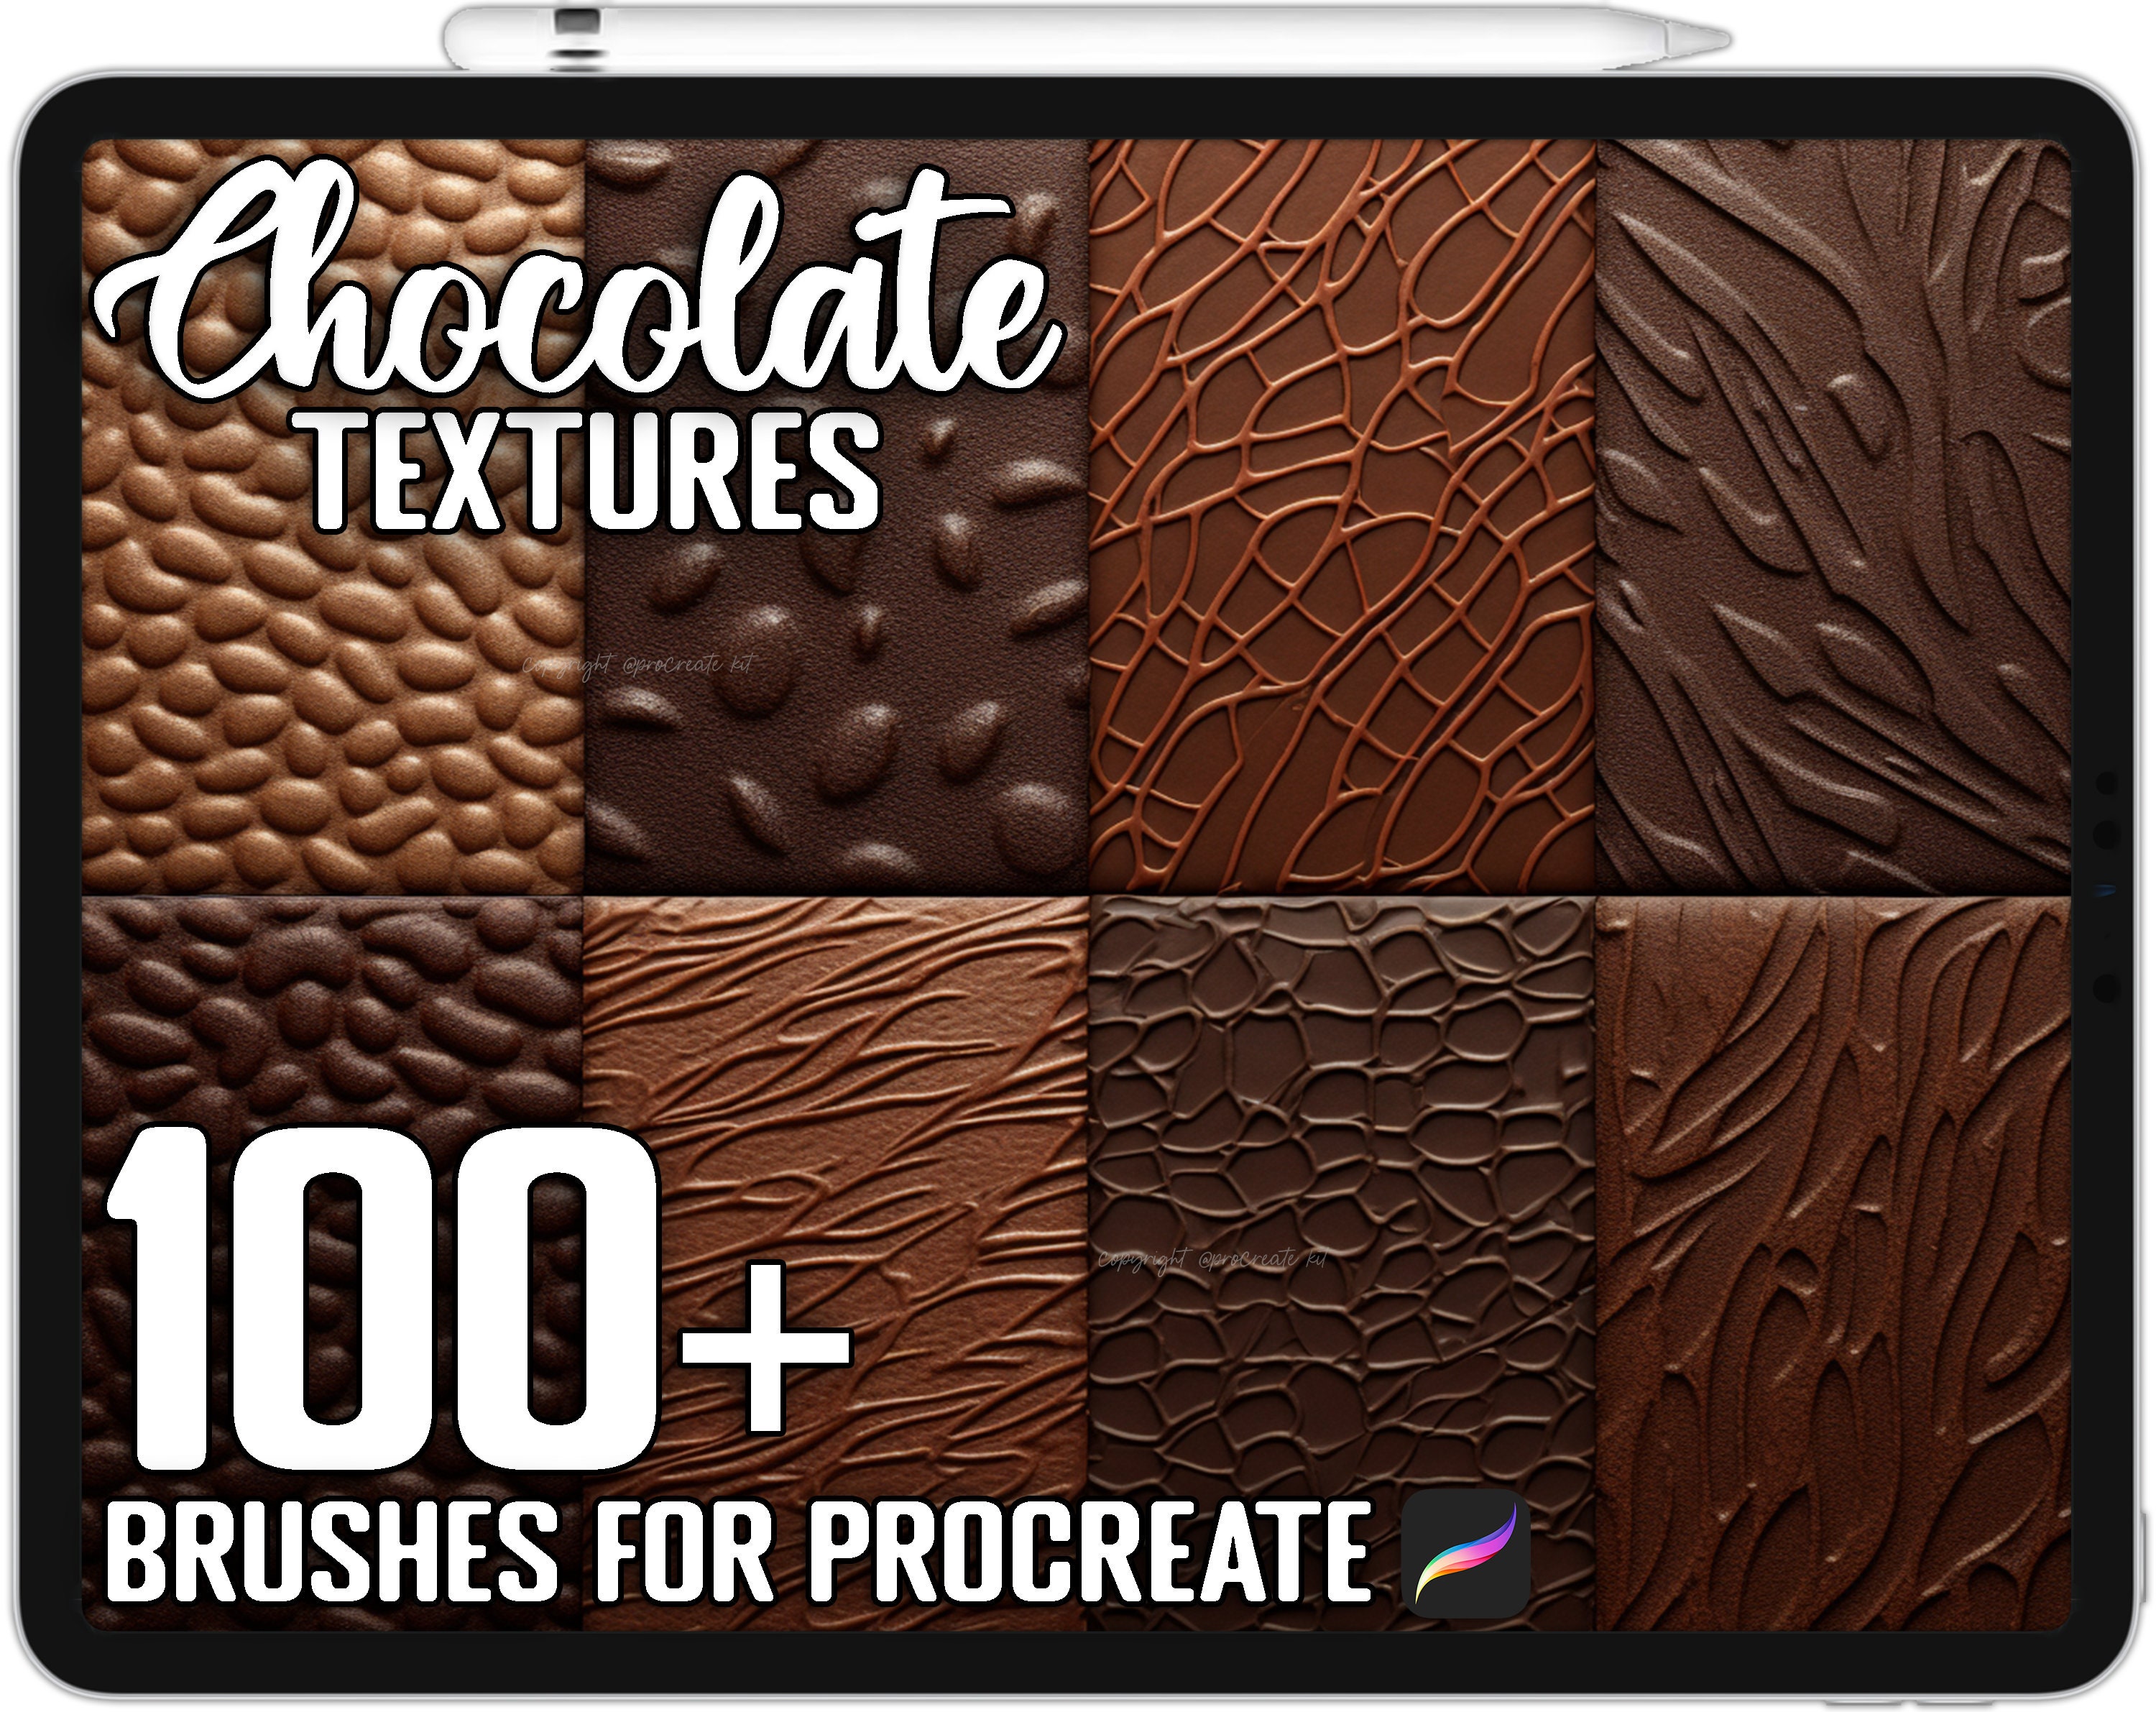 Chocolate Bar Pattern Procreate Brush